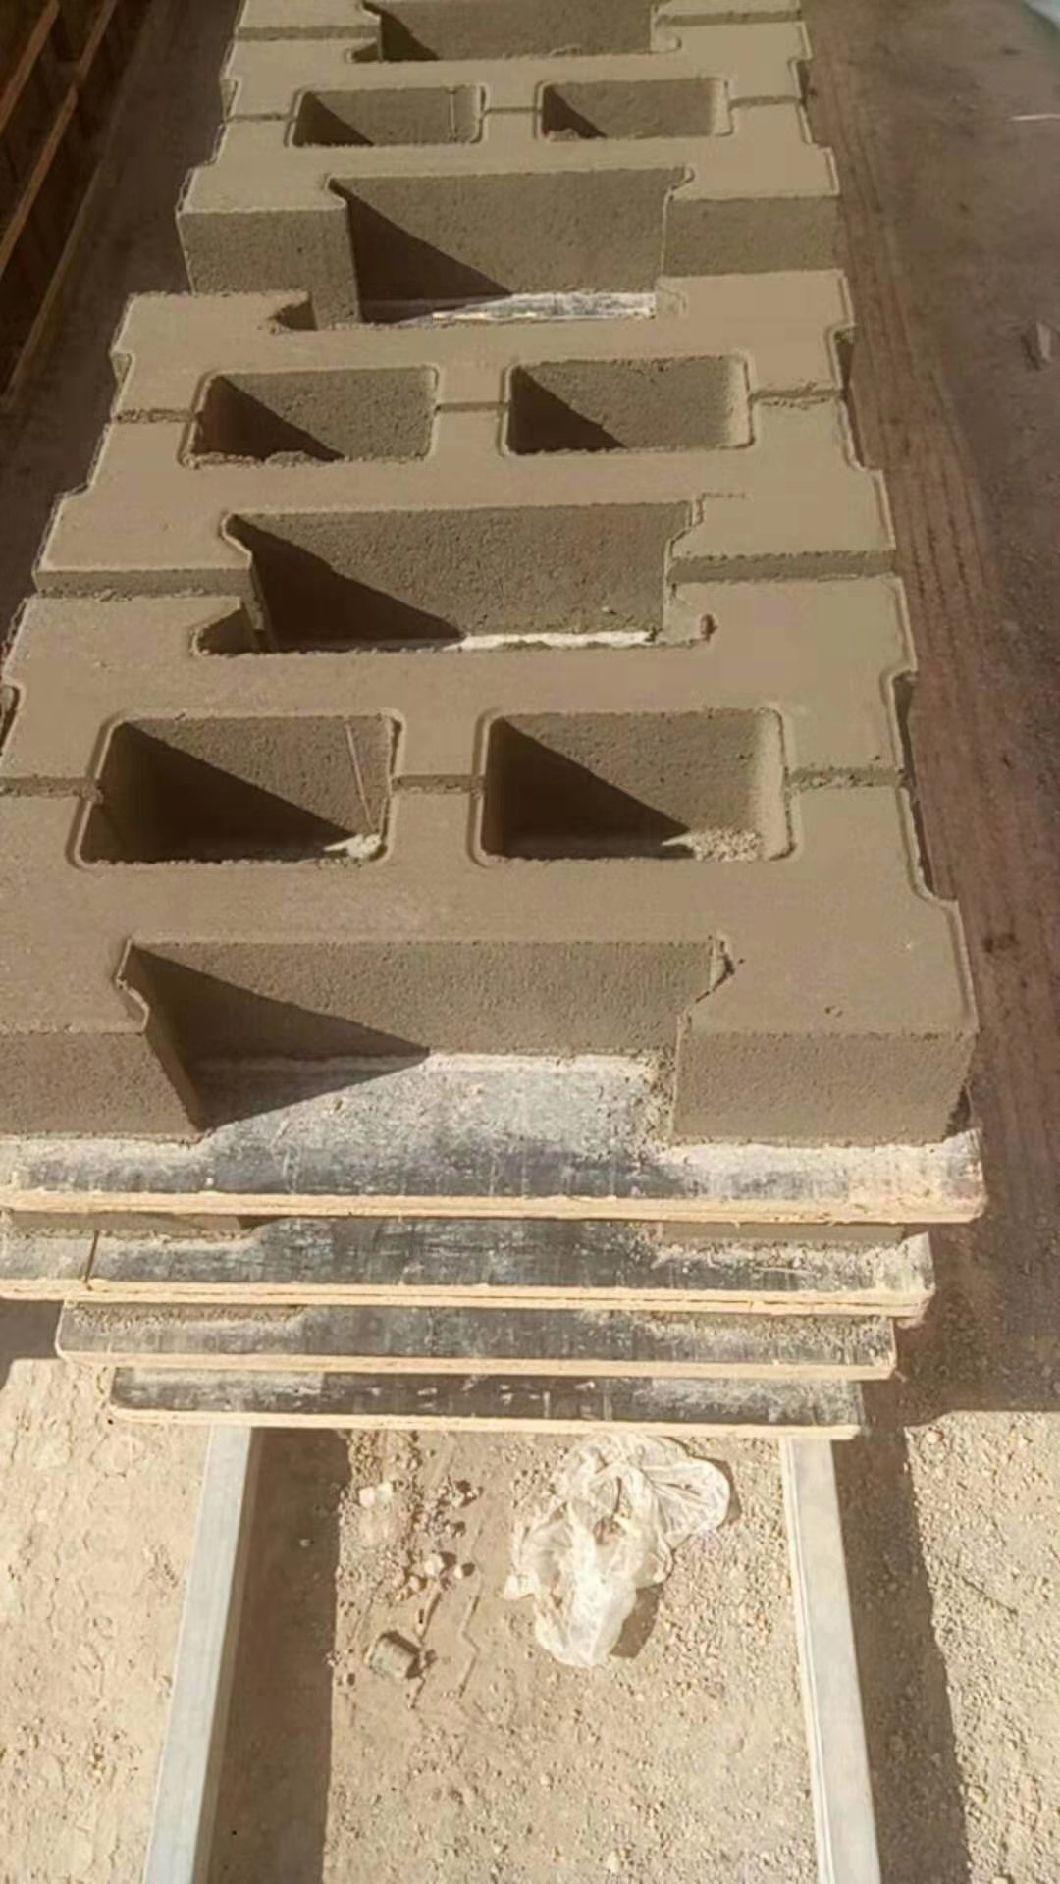 According to Customer Design Garden Brick Making Equipment